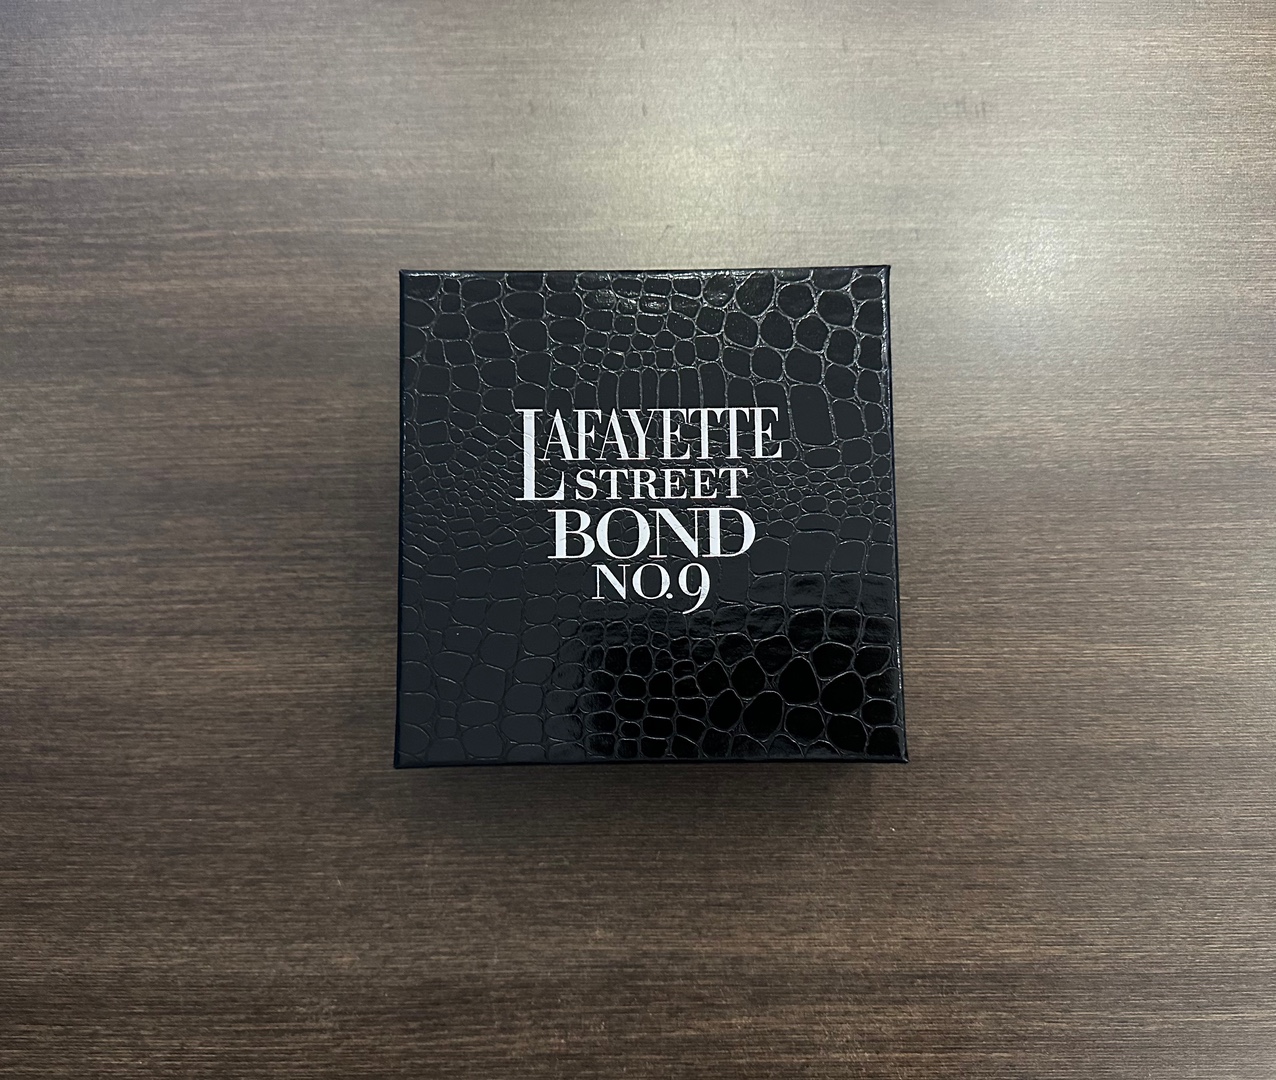 joyas, relojes y accesorios - Perfume Bond No.9 NYC LAFAYETTE STREET 100ML Original RD$ 17,000 NEG